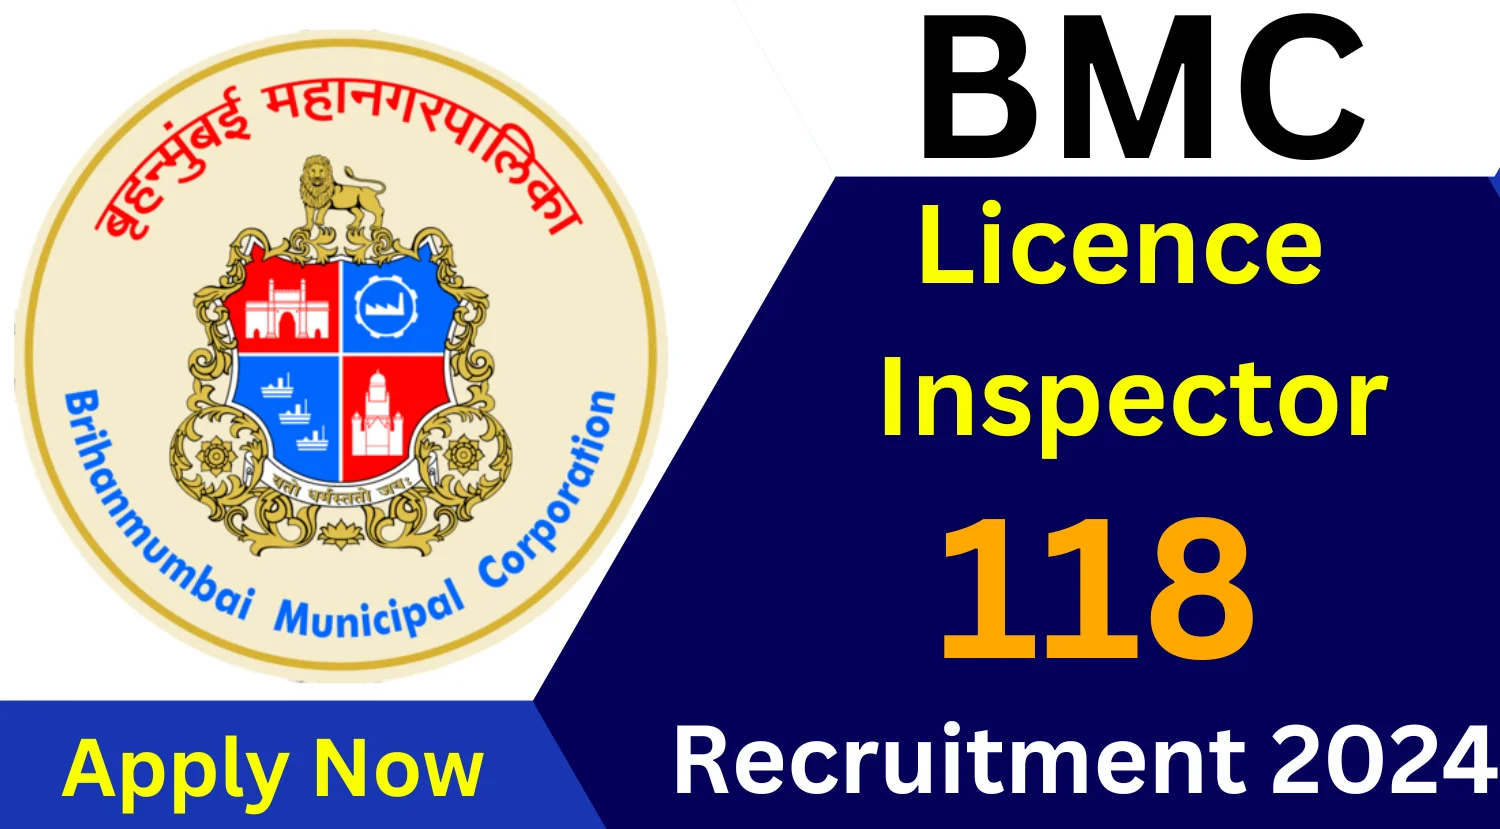 BMC Licence Inspector Recruitment 2024 Notification Out